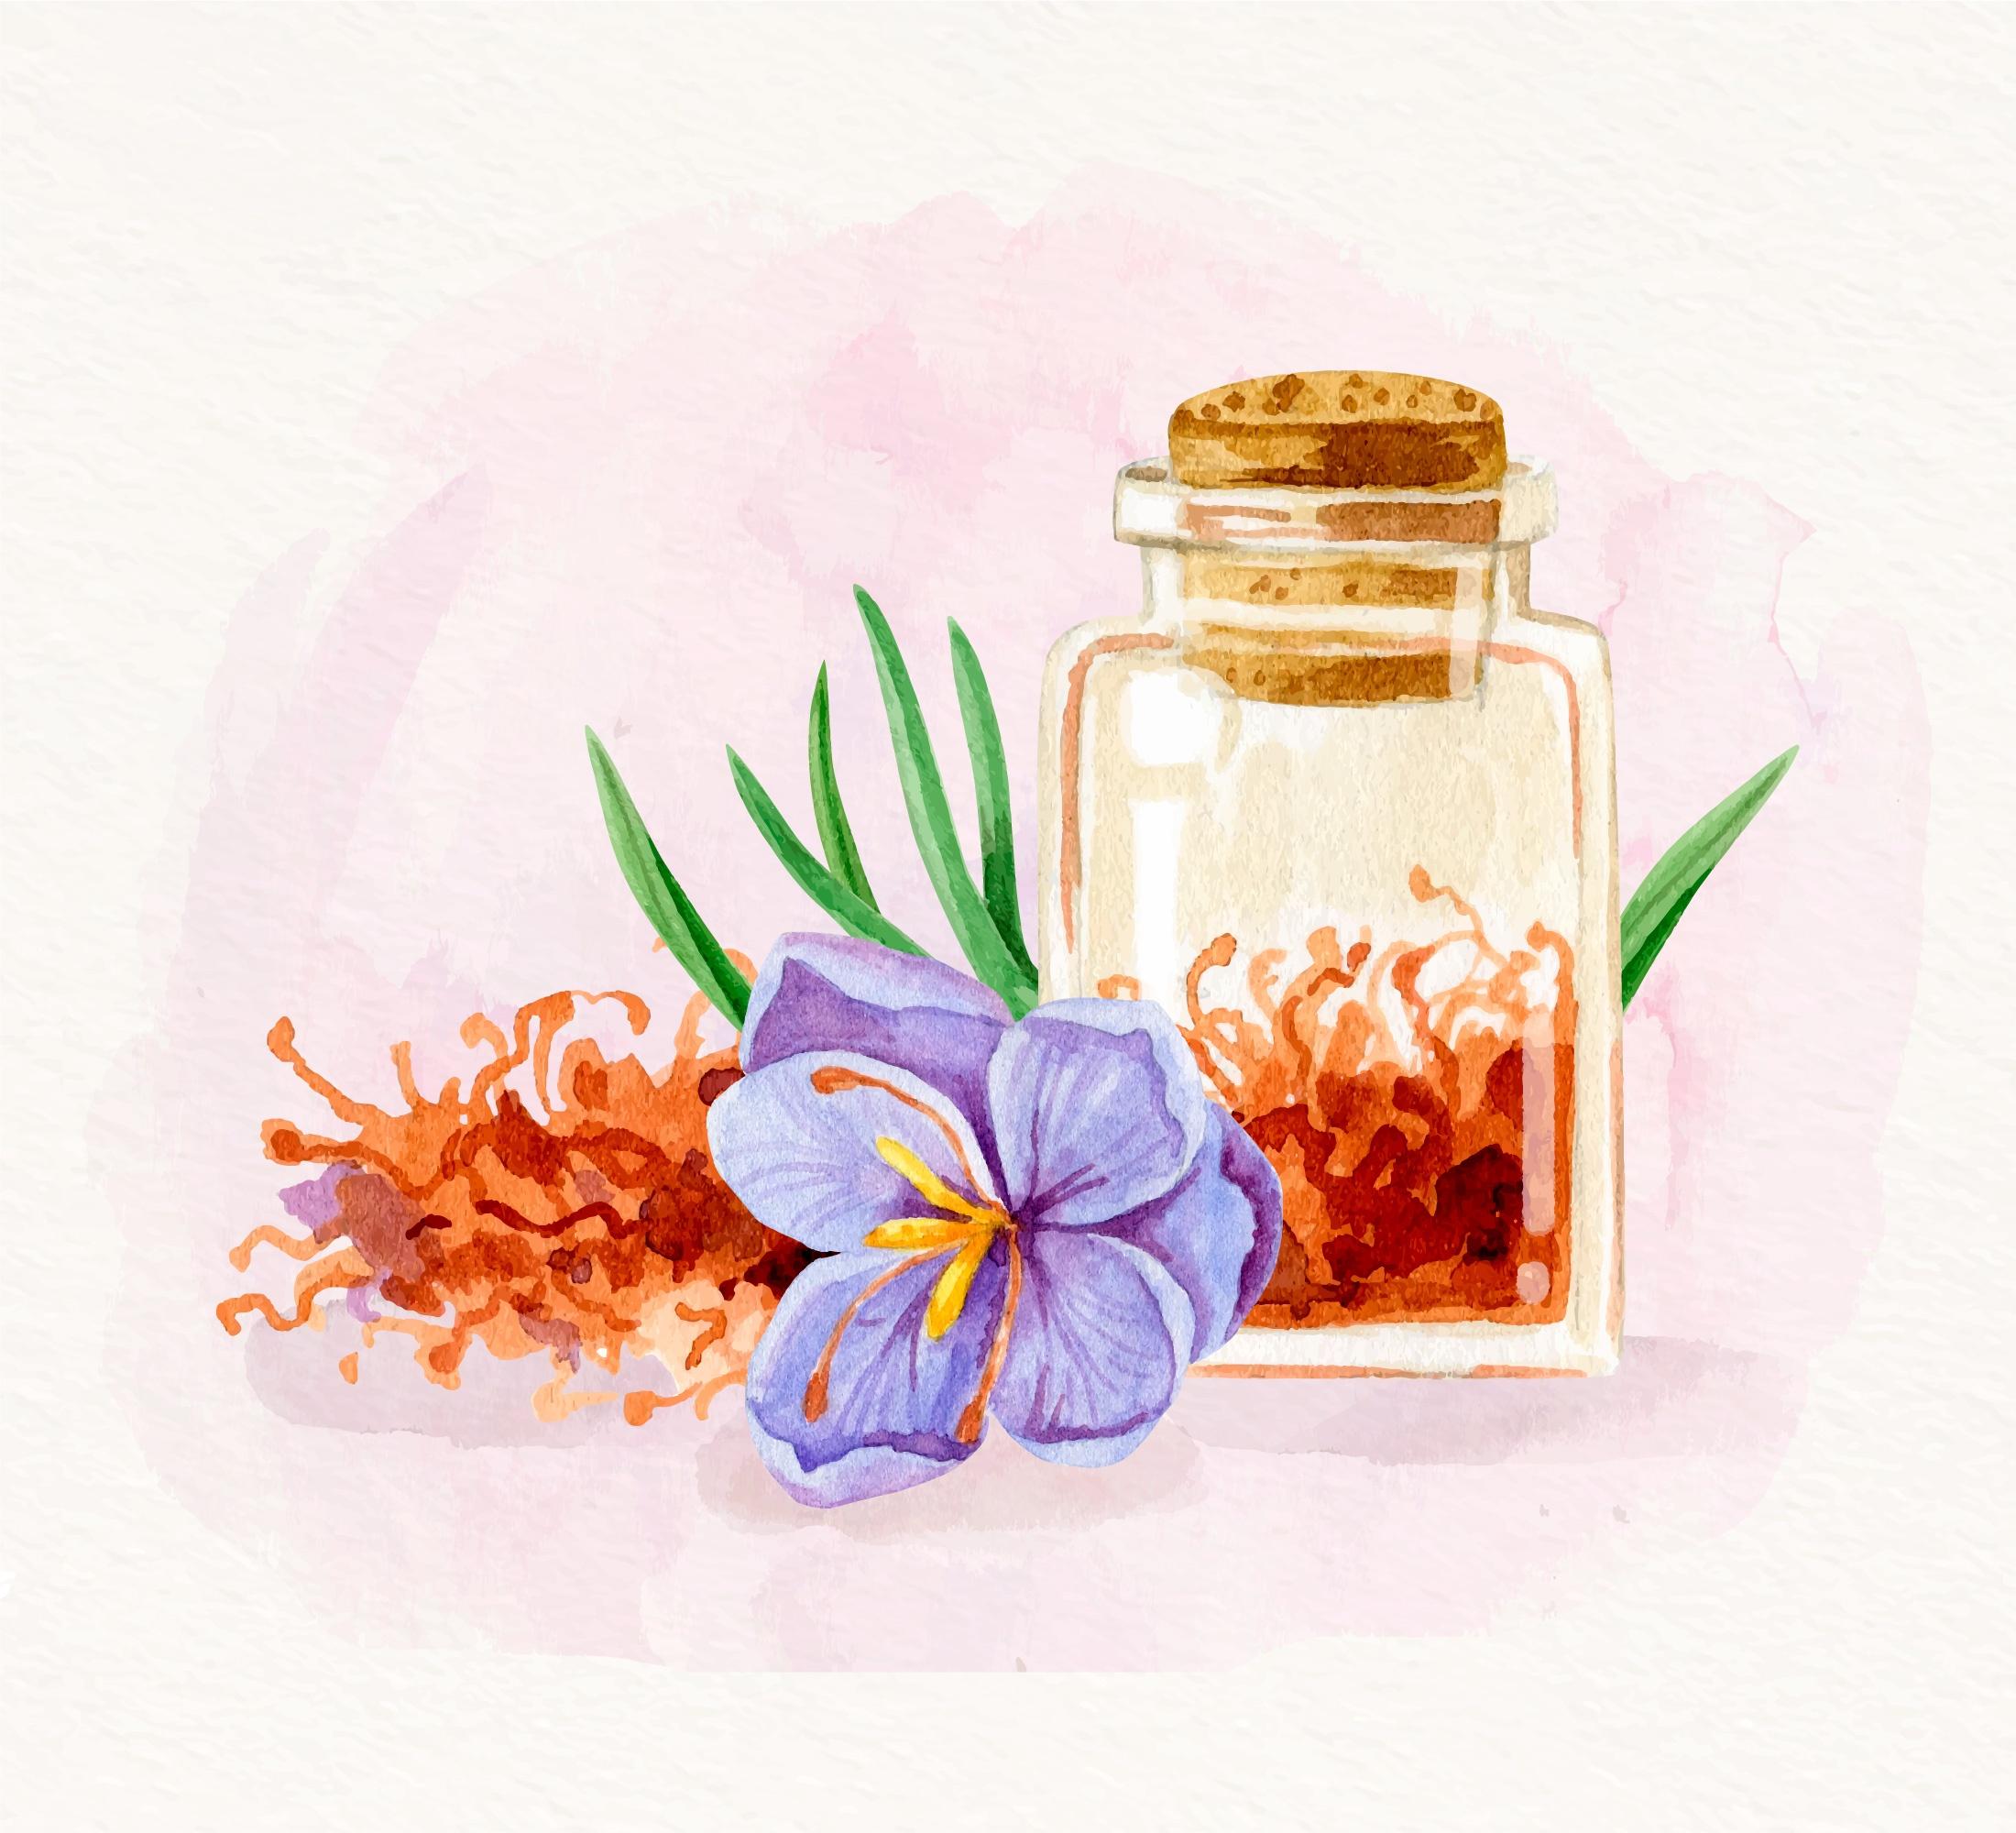 https://ru.freepik.com/free-vector/watercolor-saffron-flower-illustration_22890649.htm#fromView=search&page=1&position=19&uuid=fdeca3b4-4355-4ded-8e41-c2d38c32e466